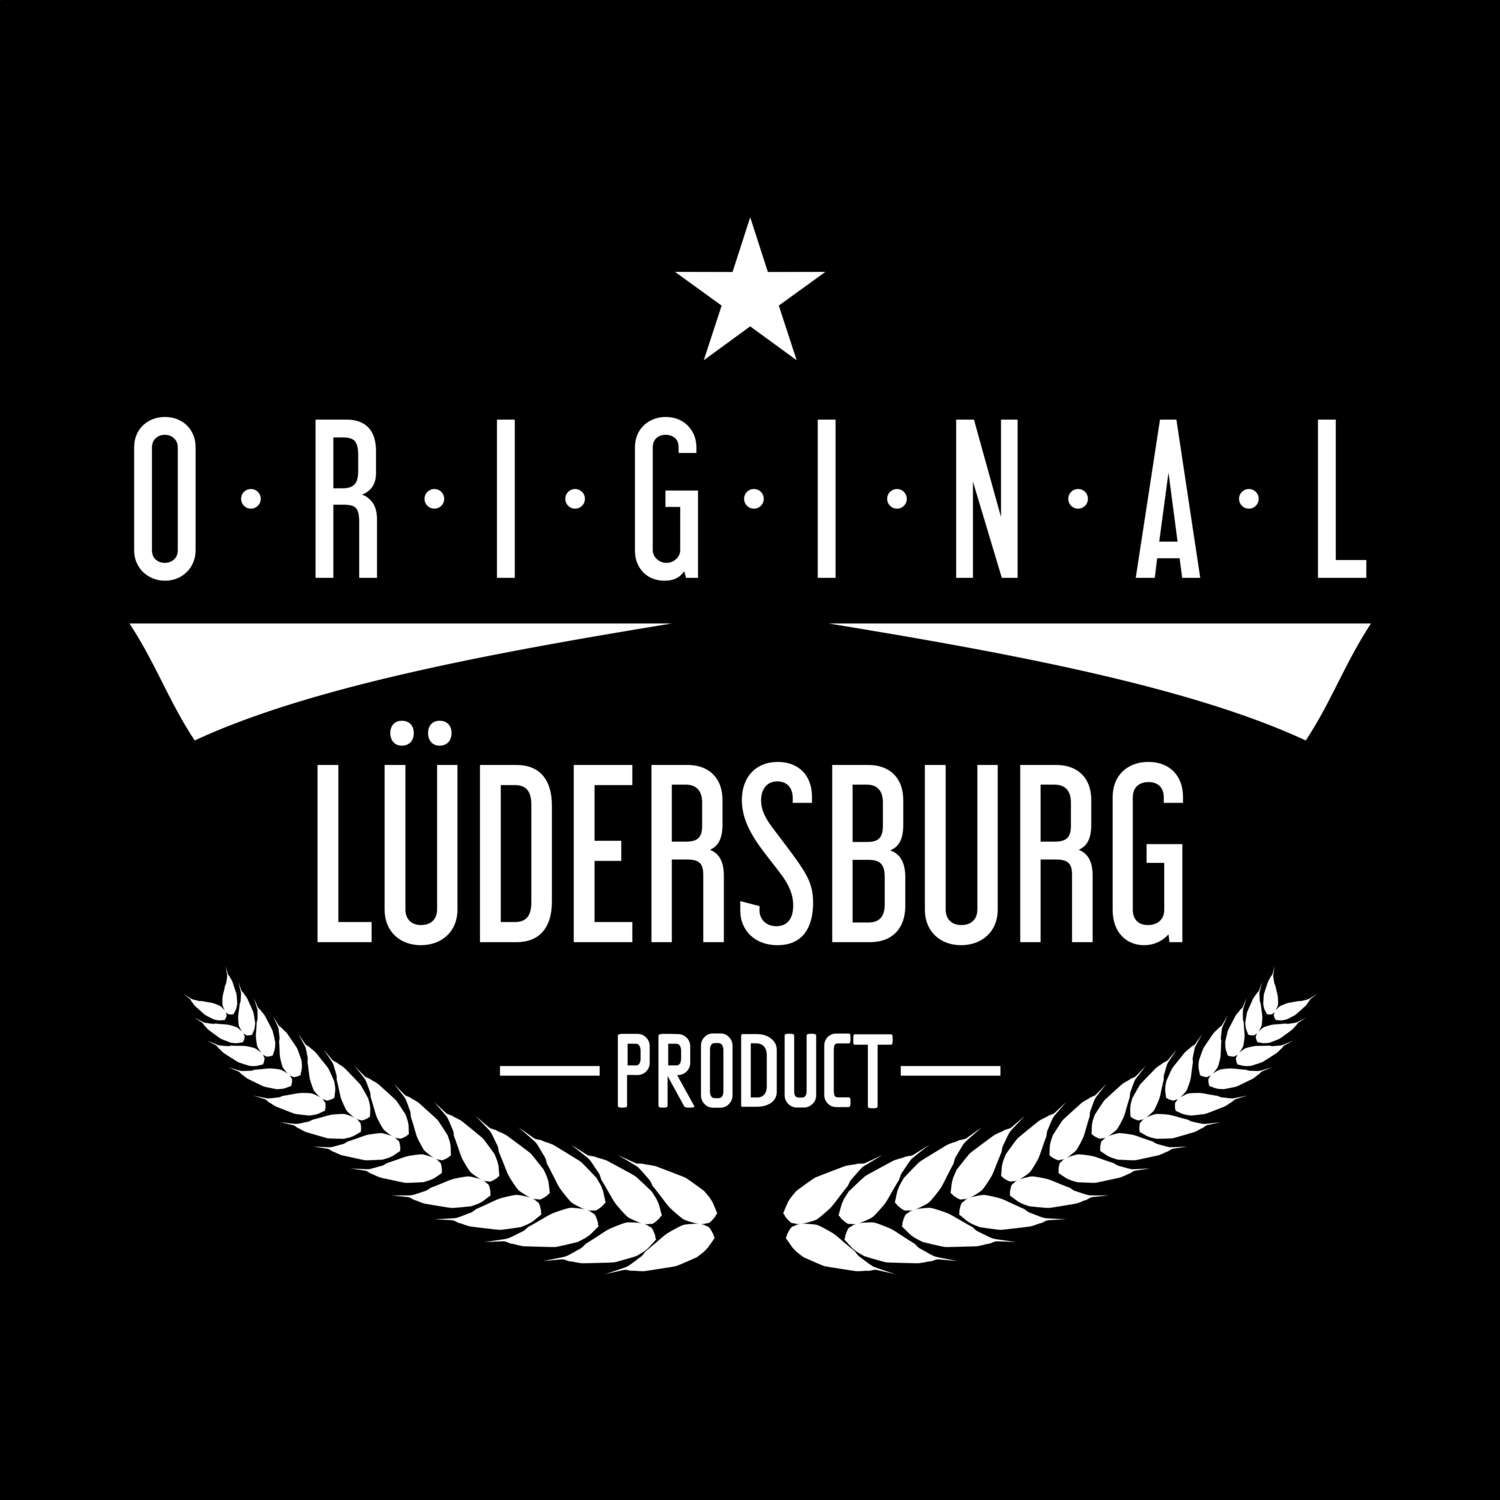 Lüdersburg T-Shirt »Original Product«